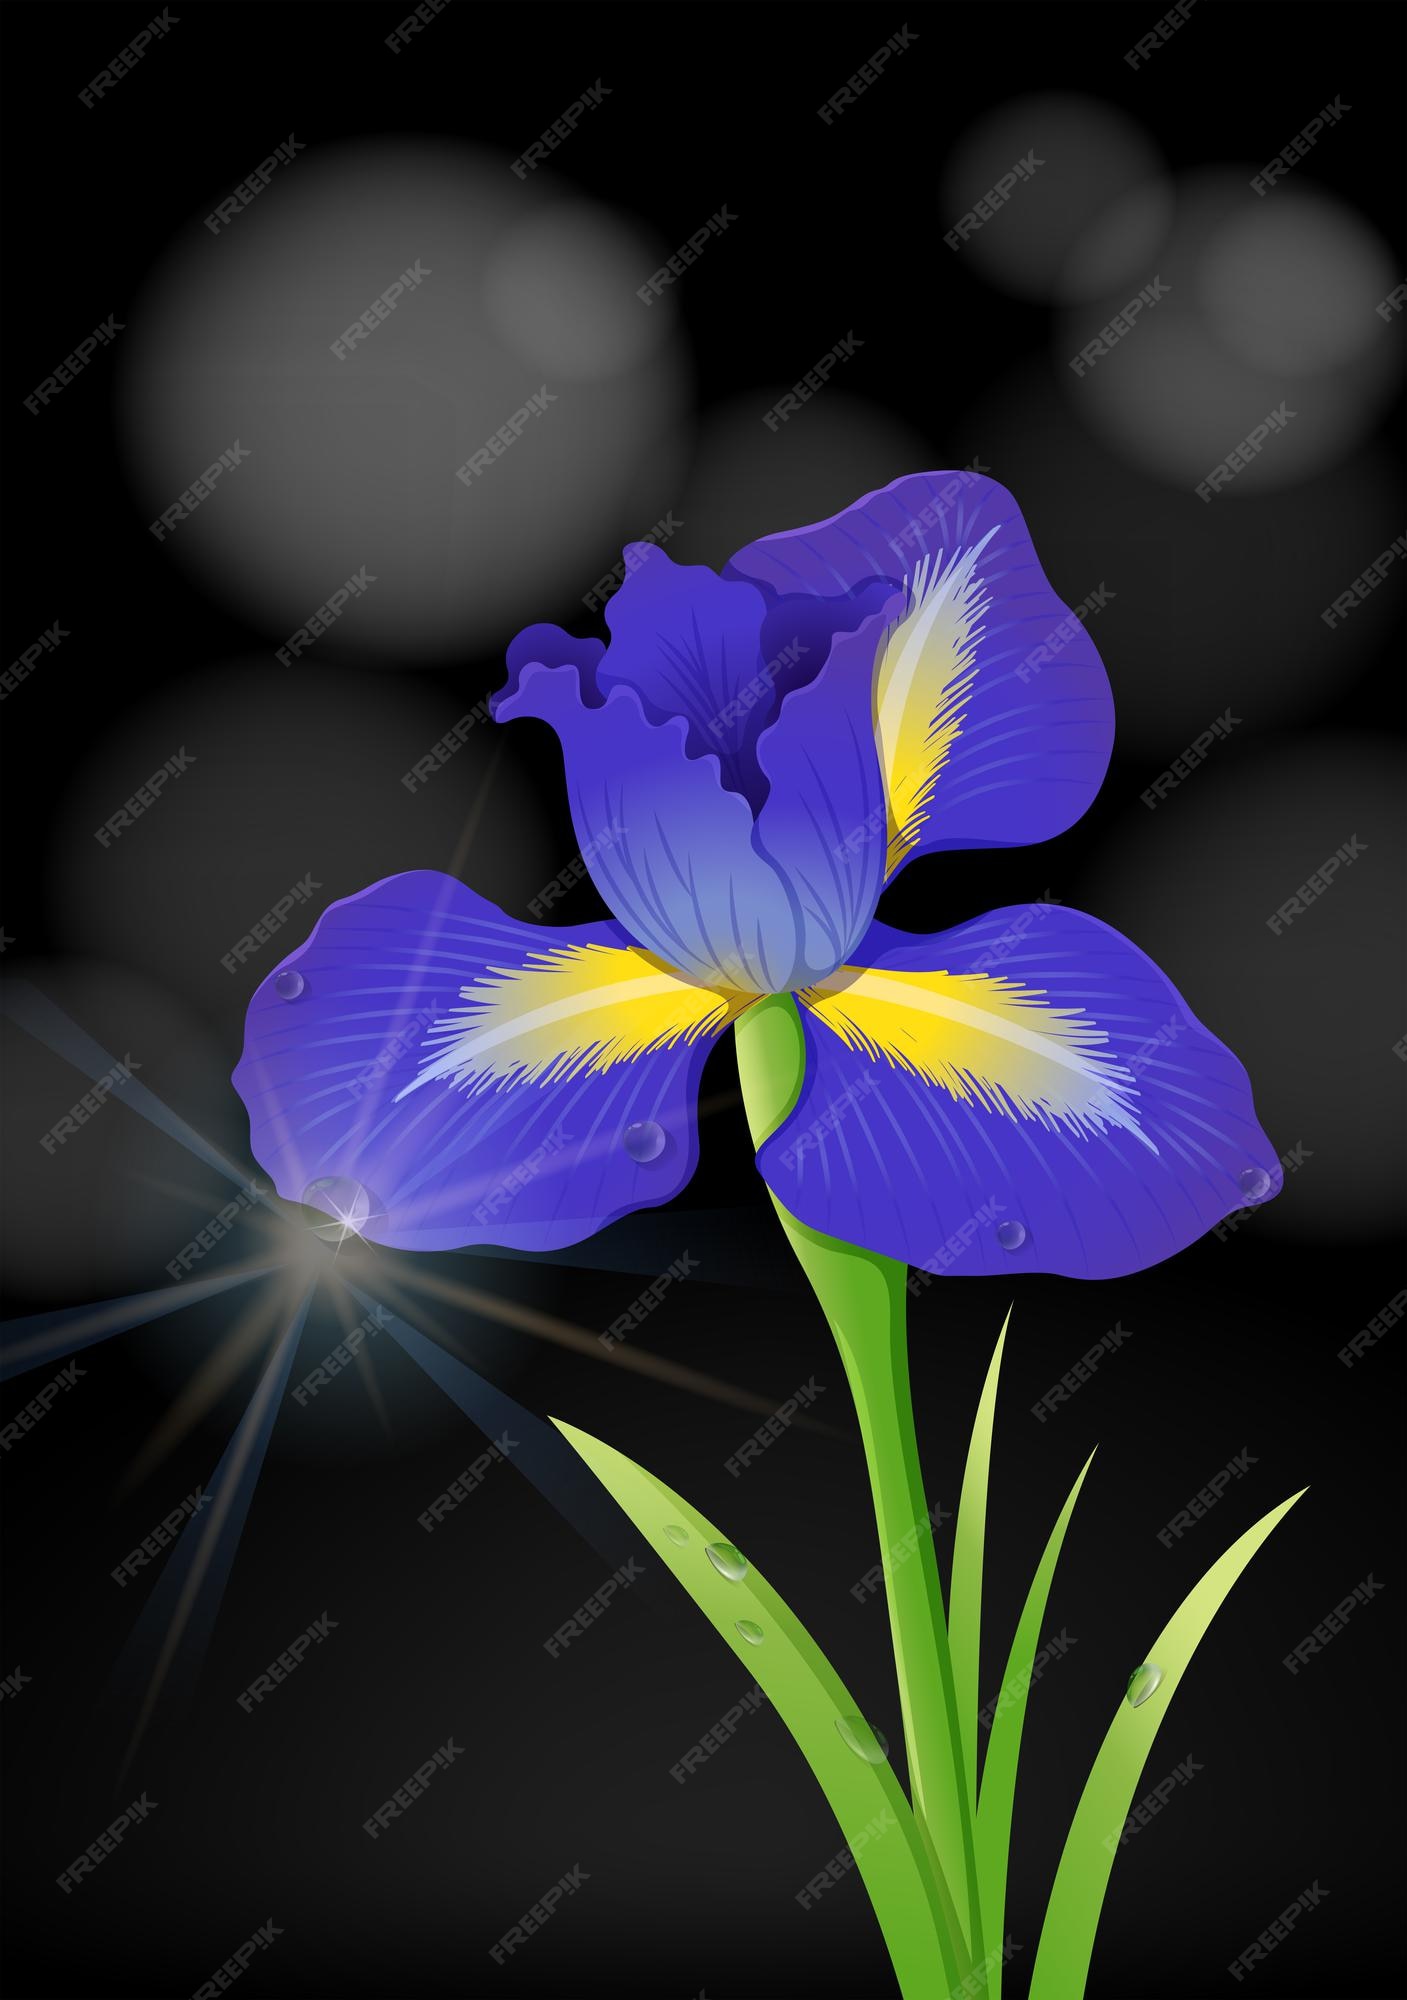 Blue Iris Flower Images   Free Vectors, Stock Photos & PSD